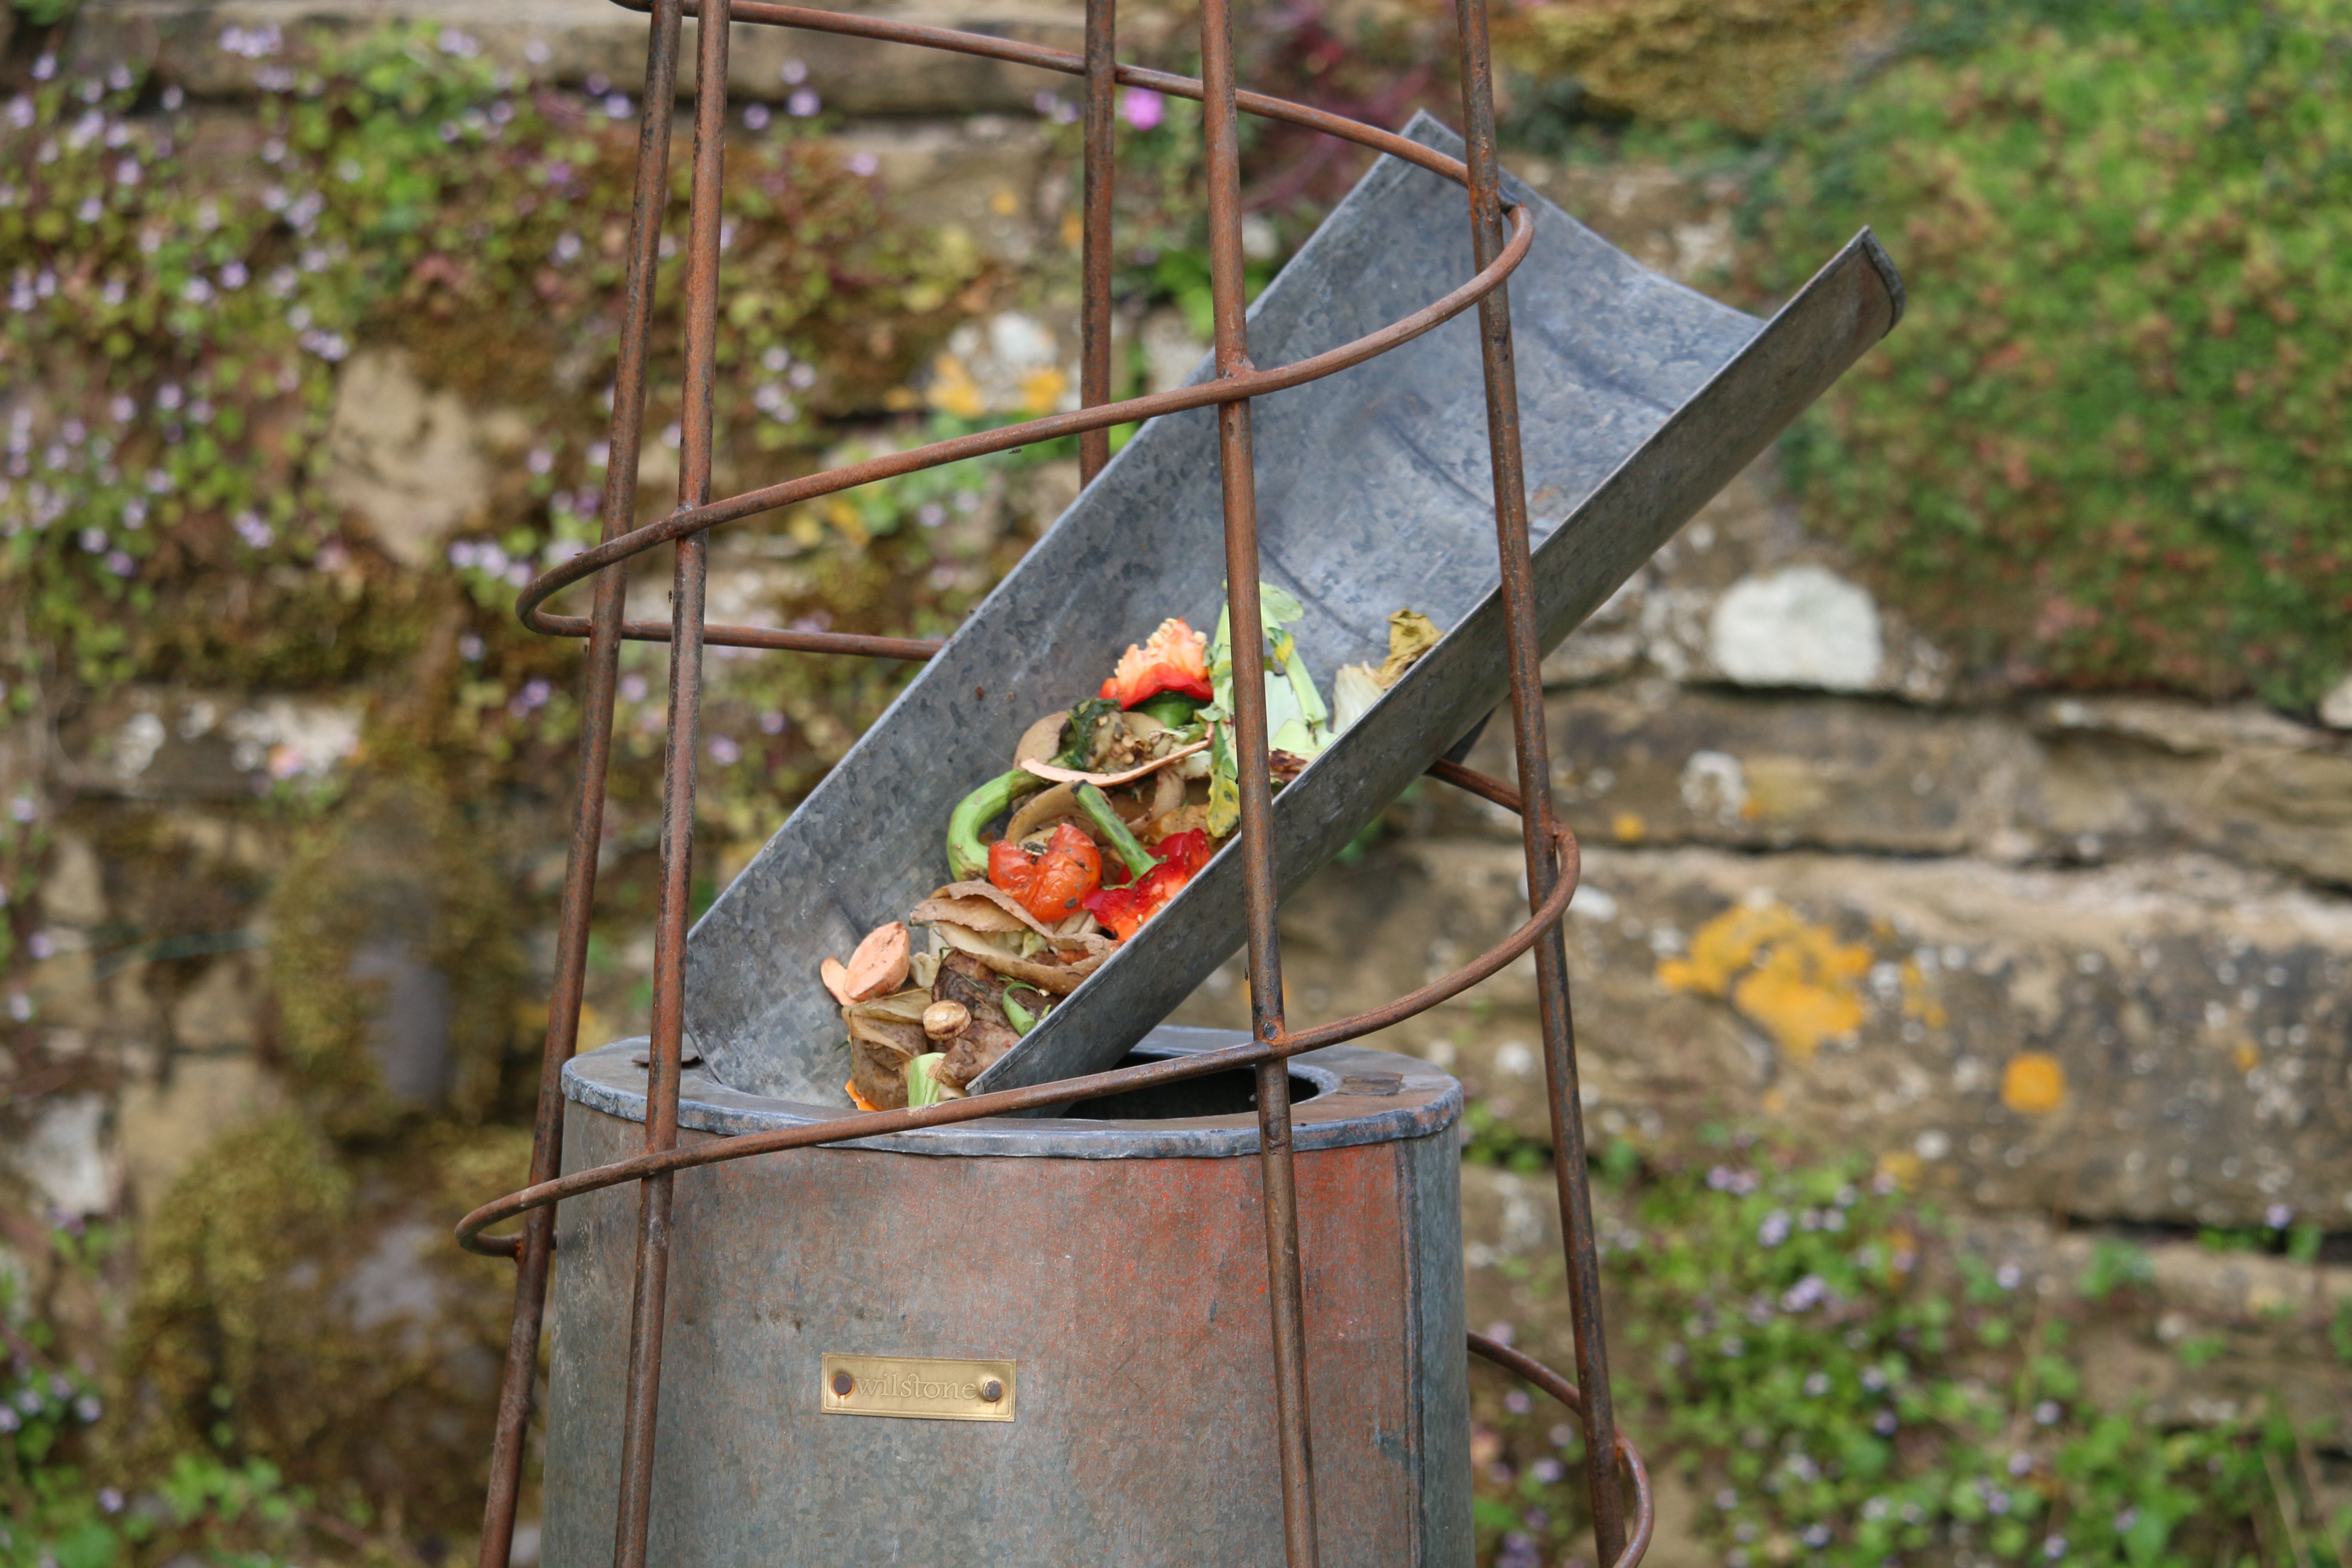 chelsea flower show garden product of the year: hotbin mini compost bin